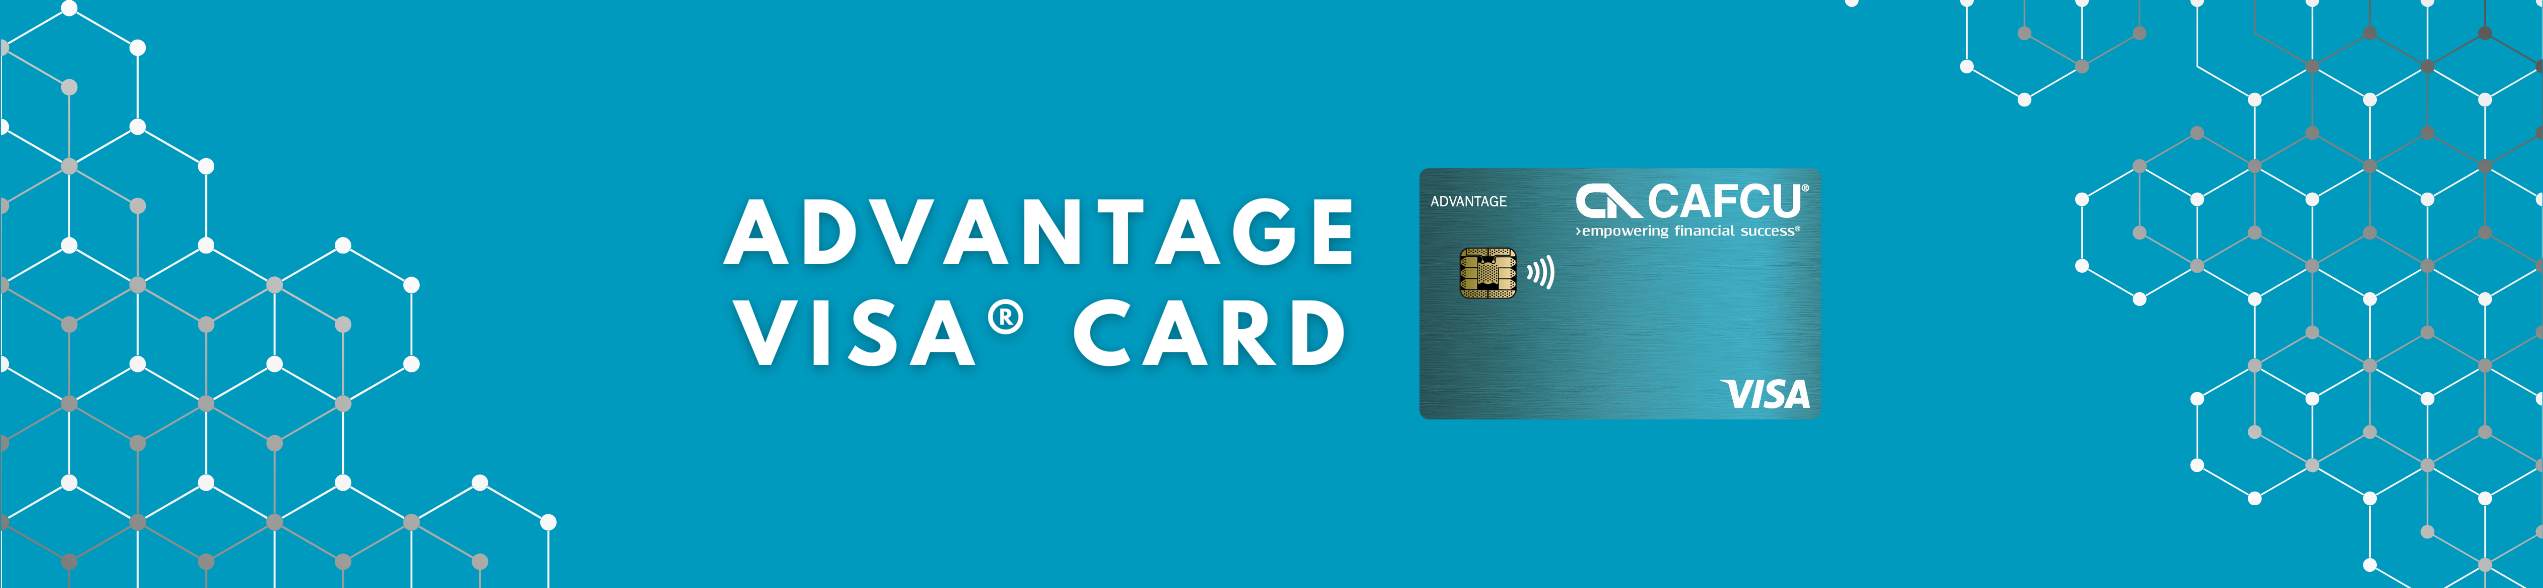 Advantage Visa Credit Card